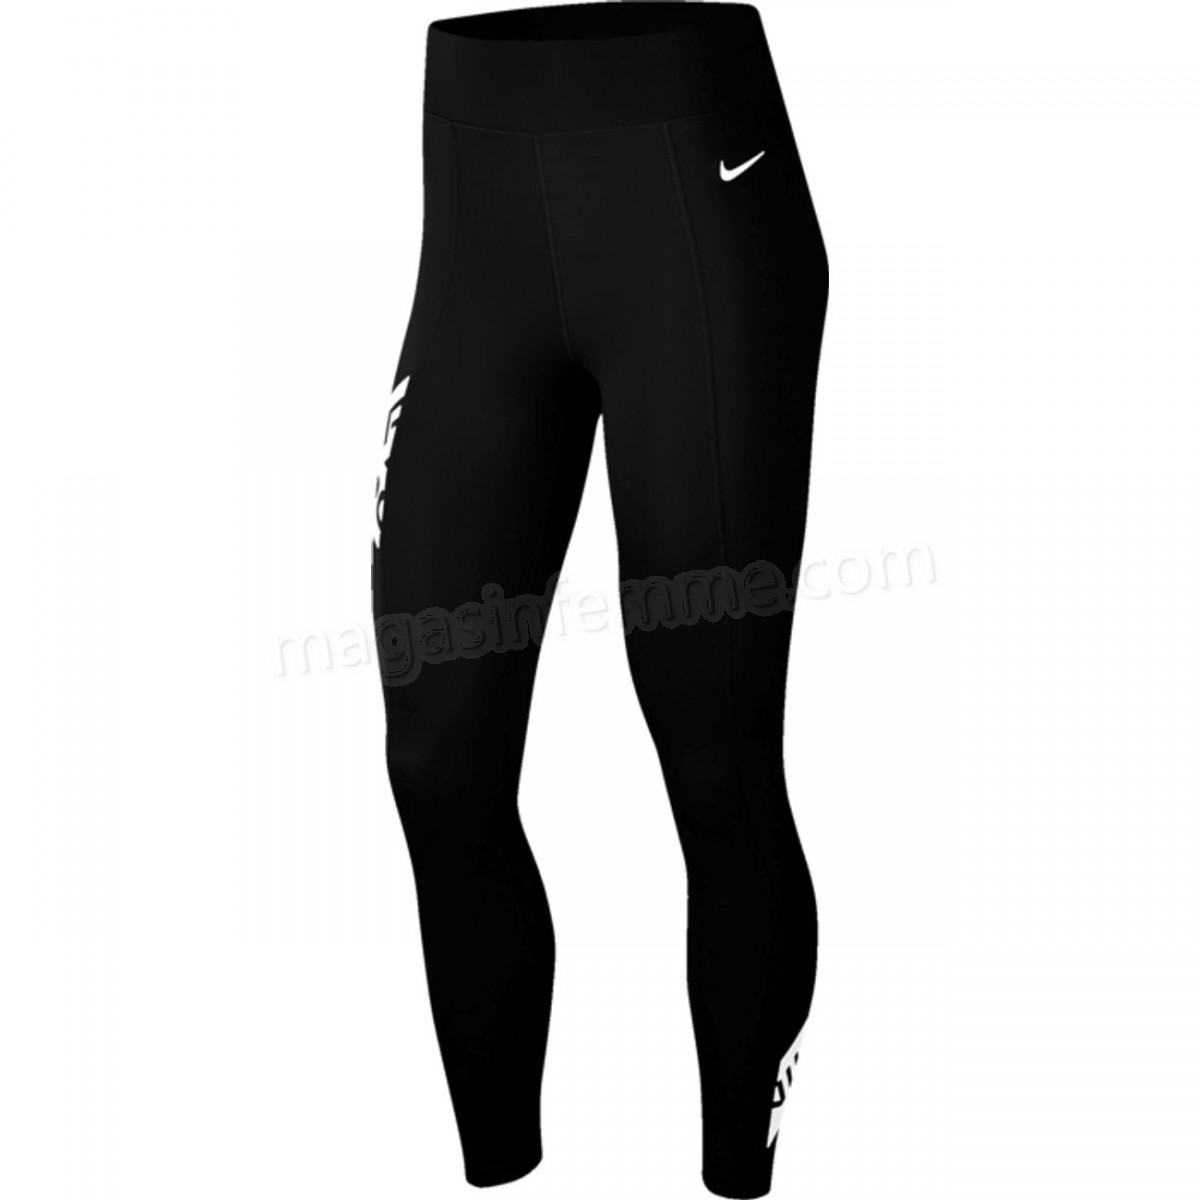 Nike-LEGGING Training femme NIKE W NP TIGHT 7/8 PP3 TROMPE L en solde - -0